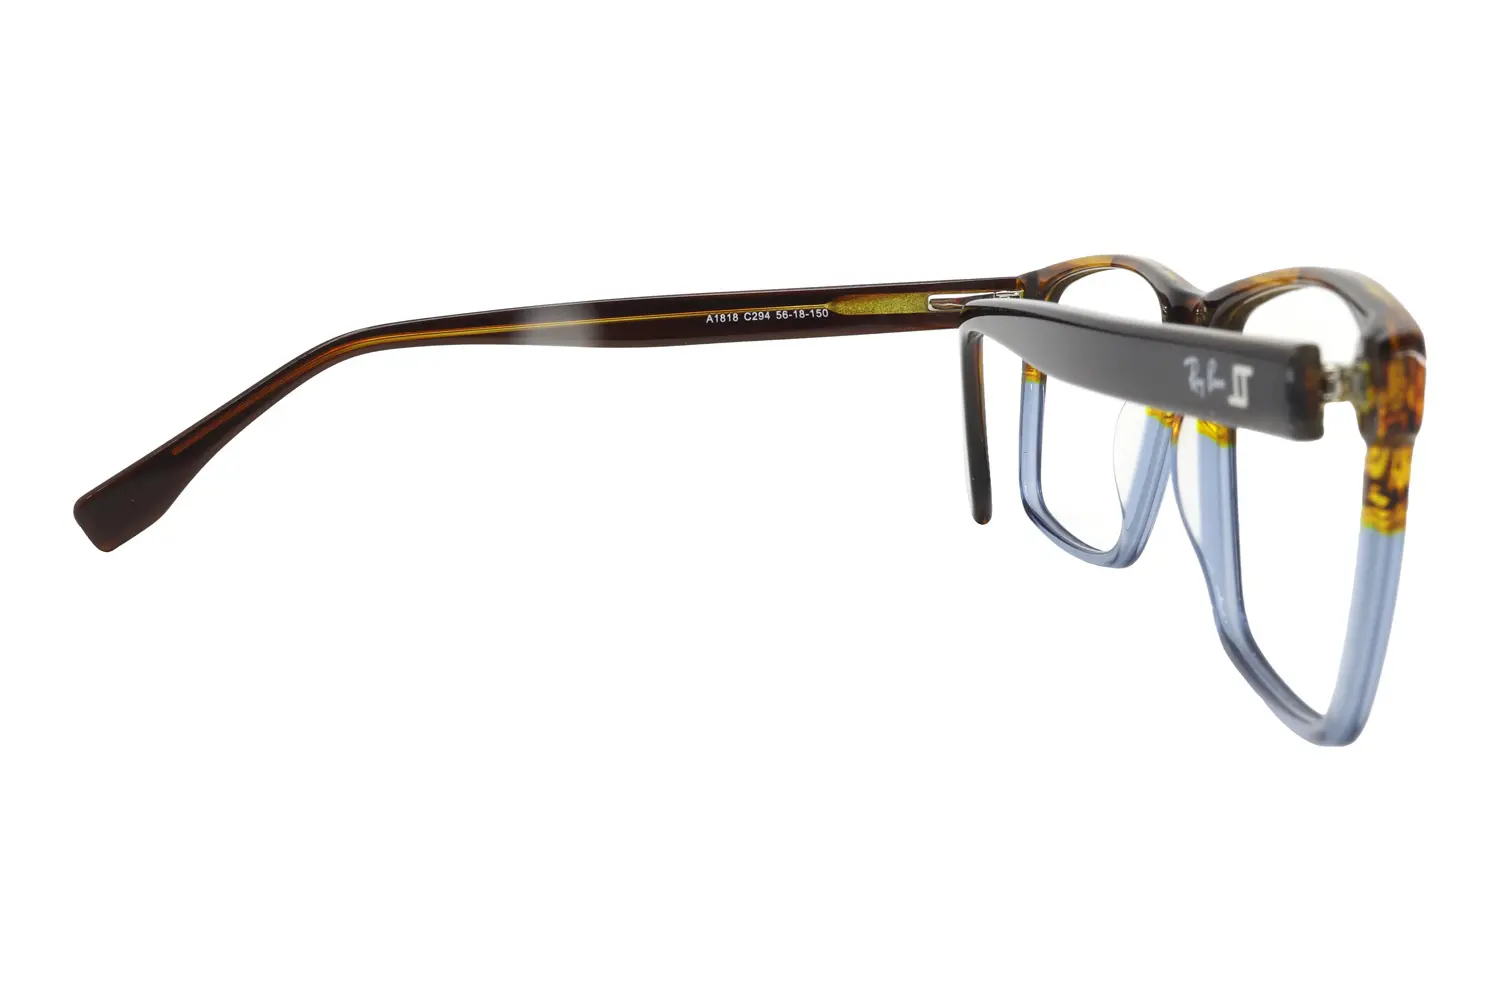 عینک طبی RAY-BAN مدل A1818 C294 - دکترعینک